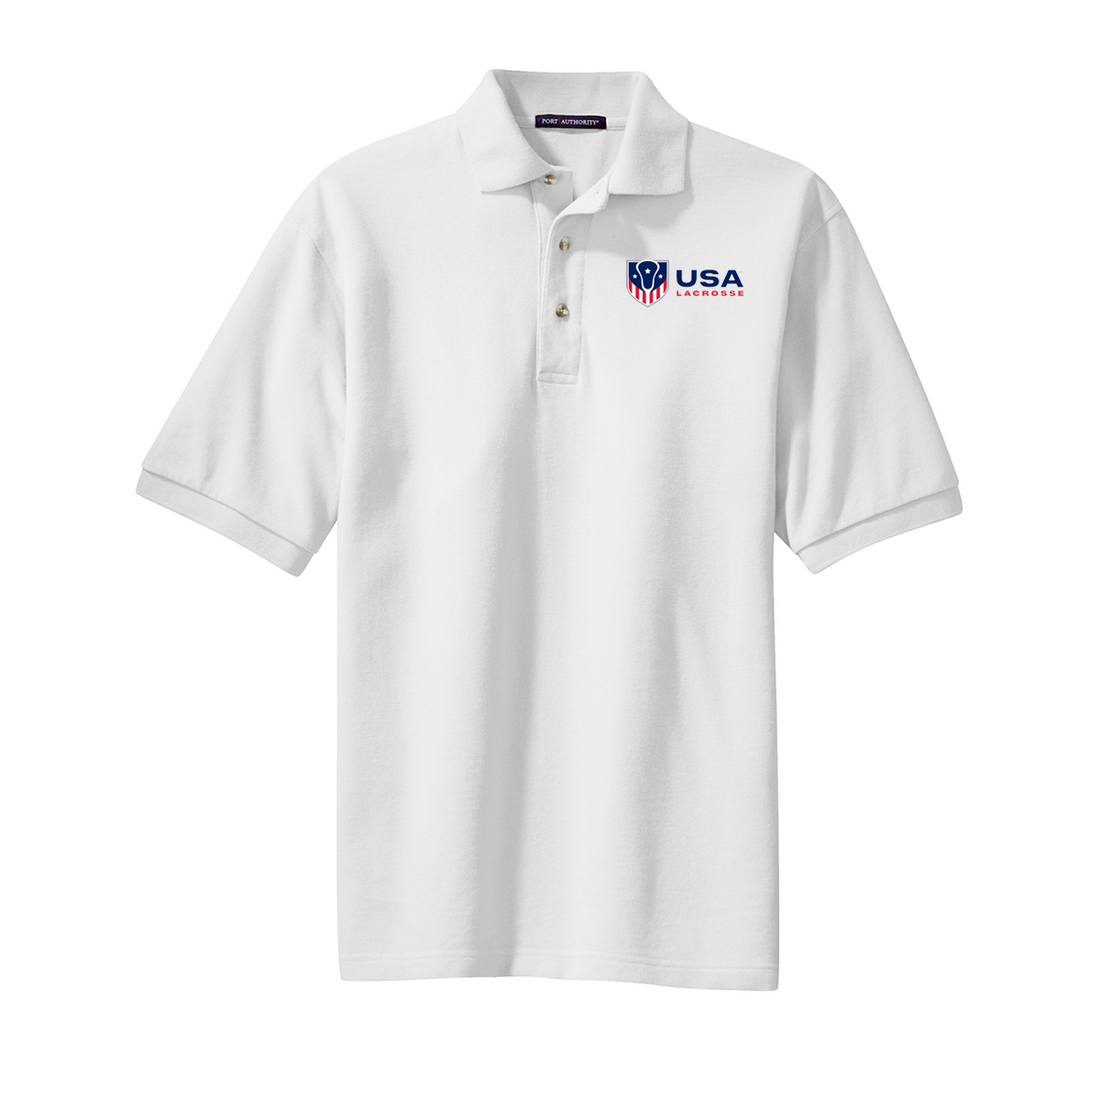 Adult's USA Lacrosse Polo Shirt